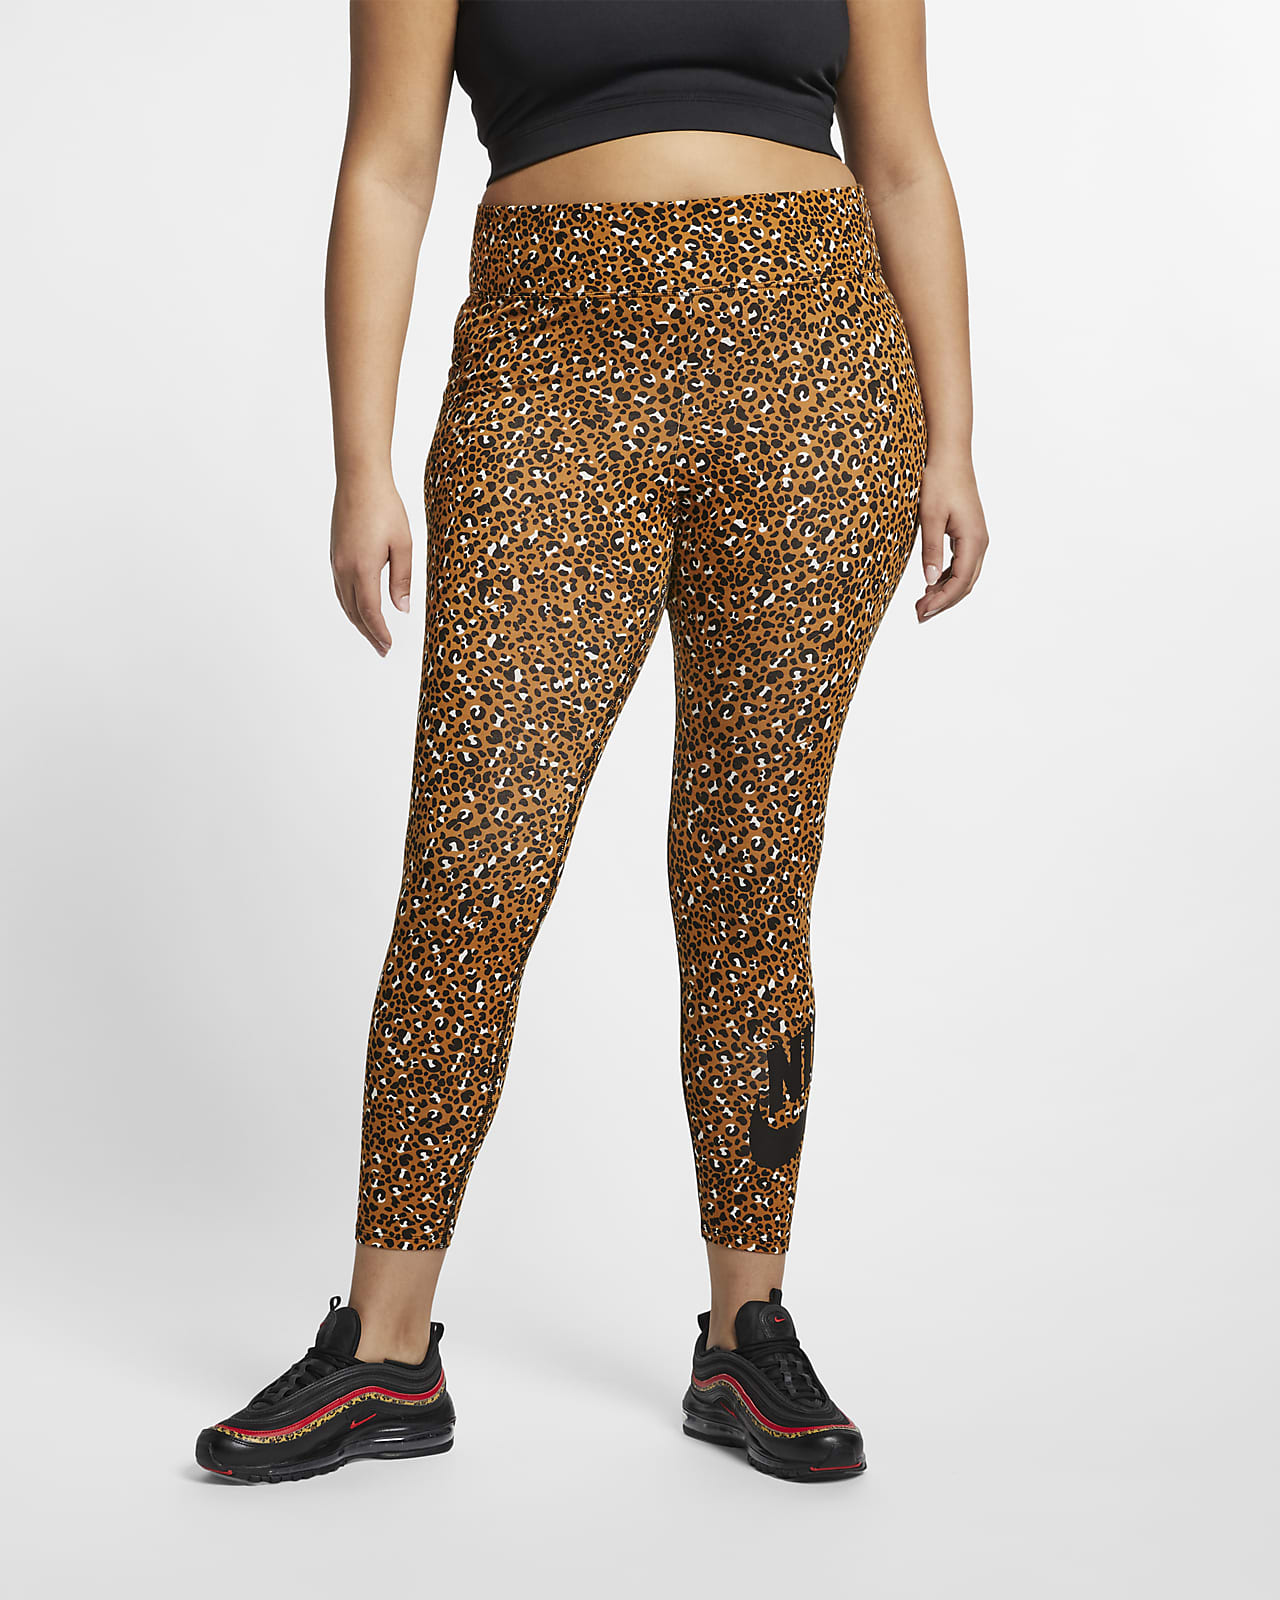 nike leggings with leopard print